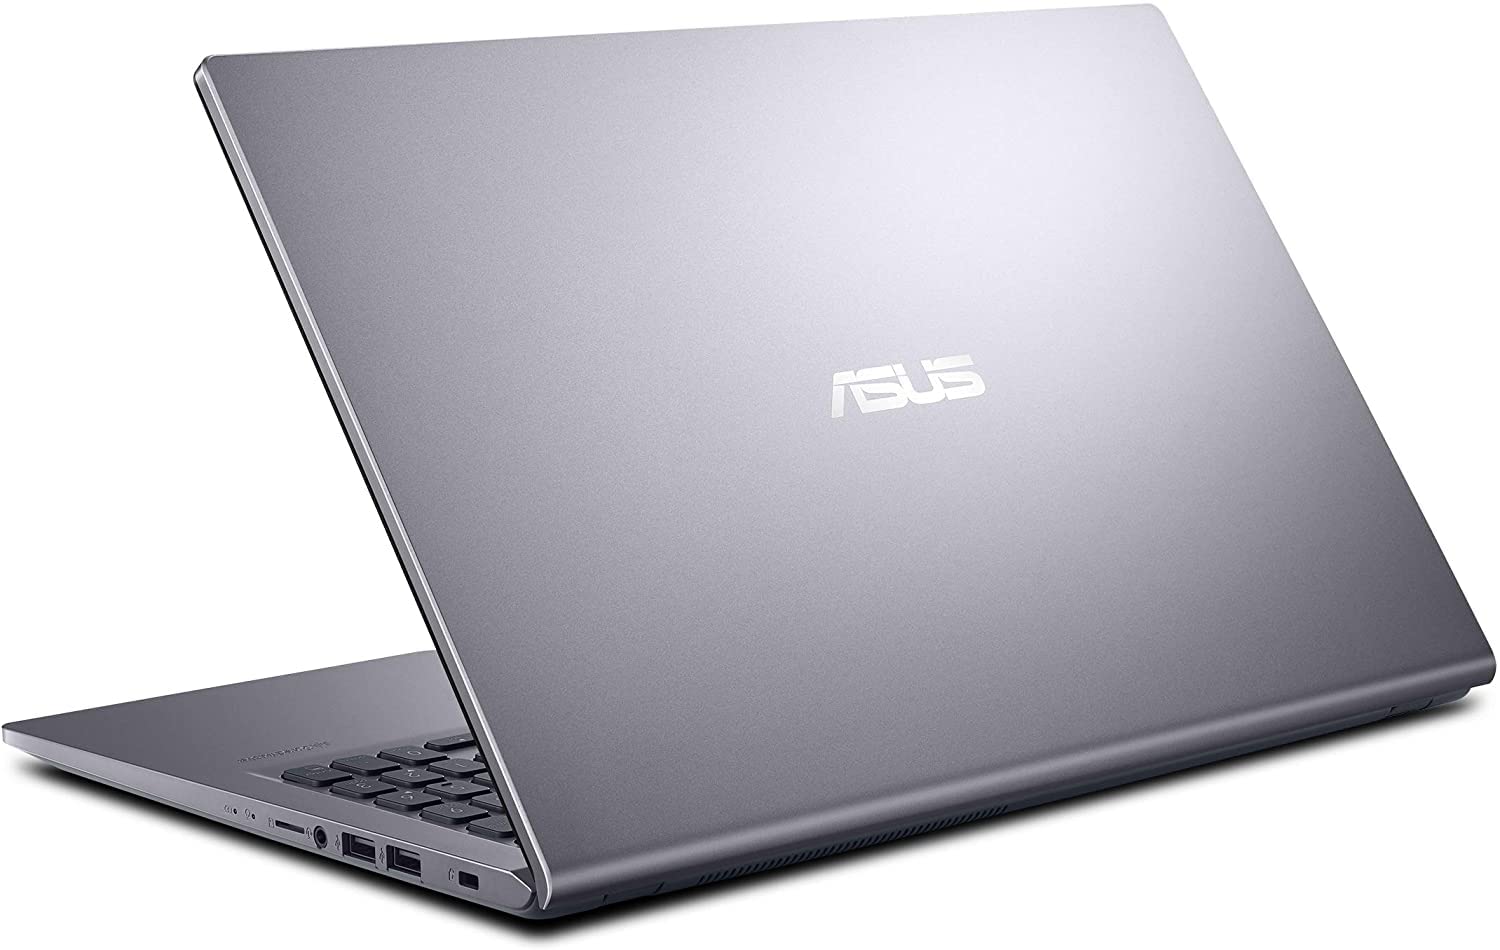 Asus ASUS VivoBook Business Laptop, 15.6' FHD 1920 x 1080 Display, Intel Core i3-1115G4 (Beats i7-8550U), Long Battery Life, SonicMaster Audio, Thin & Light, Win 11 (20GB RAM | 1TB PCIe SSD)